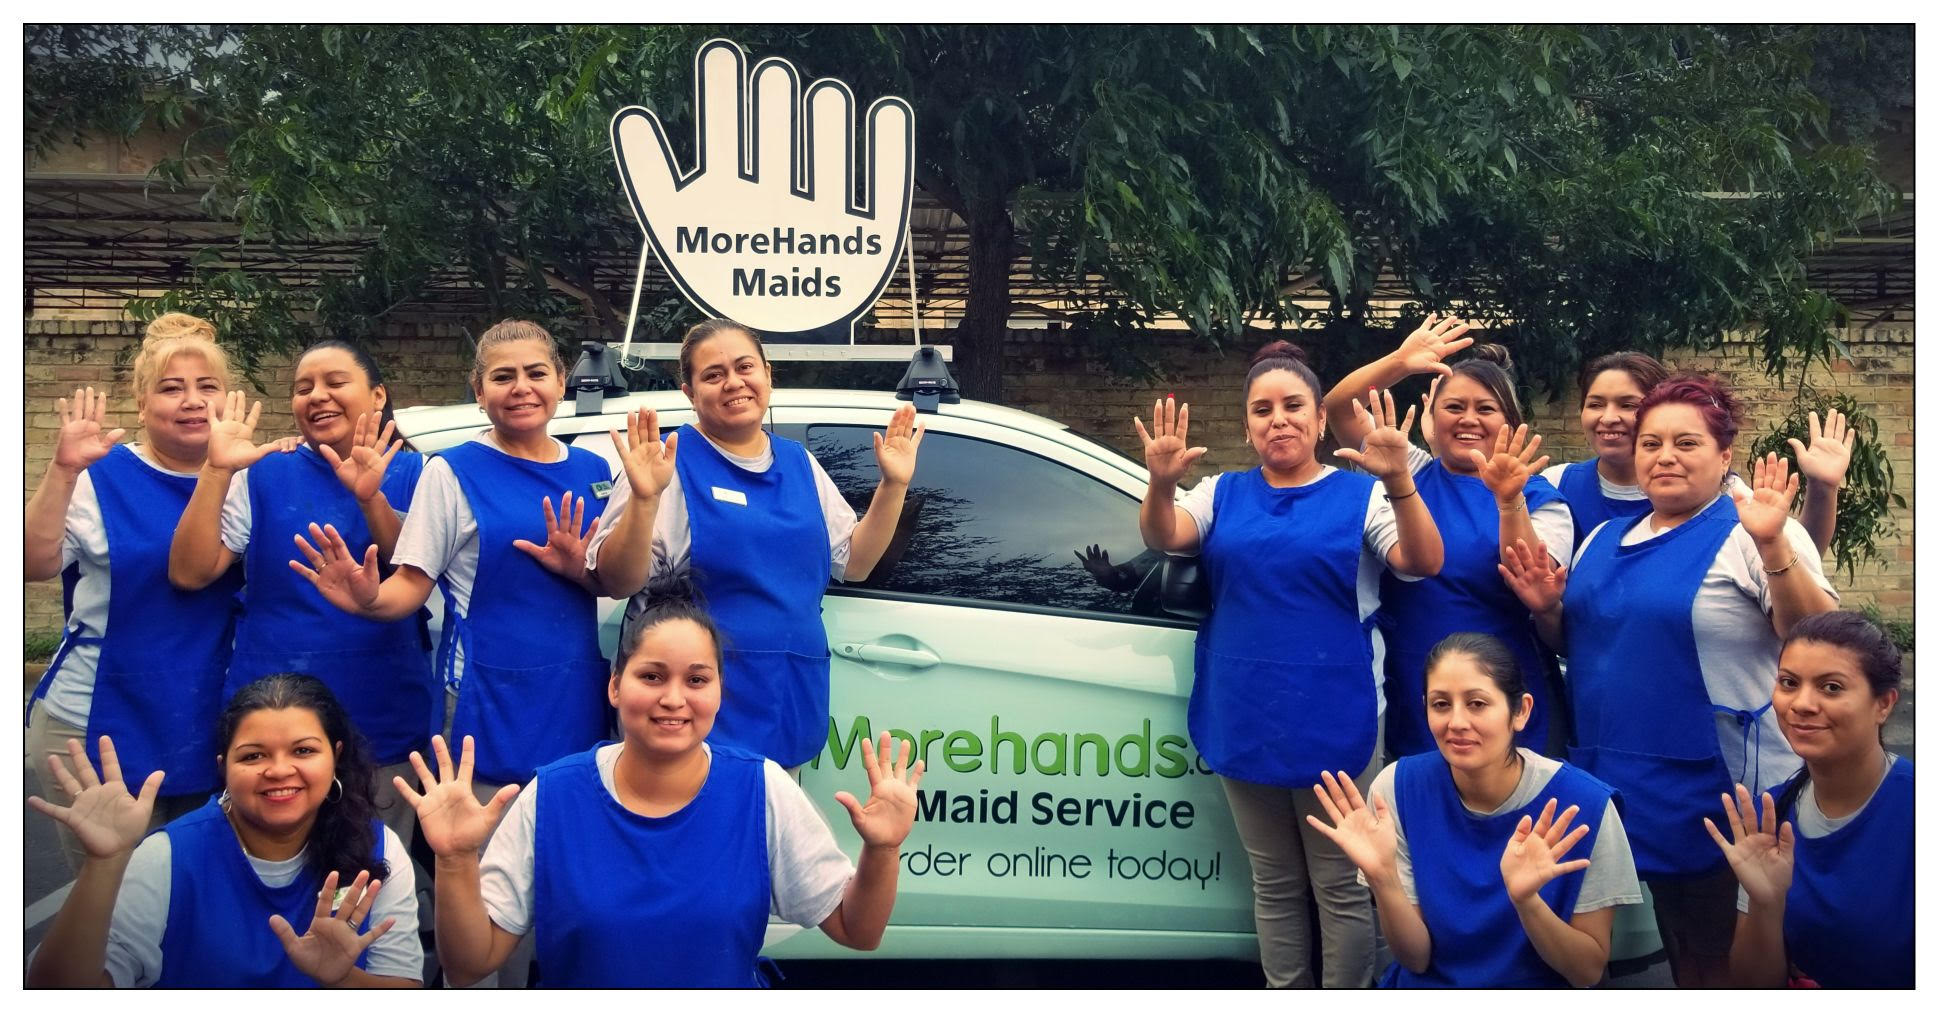 MoreHands Randy De La Cruz, Owner and Operator Managers MoreHands Best Maid Service in Plano